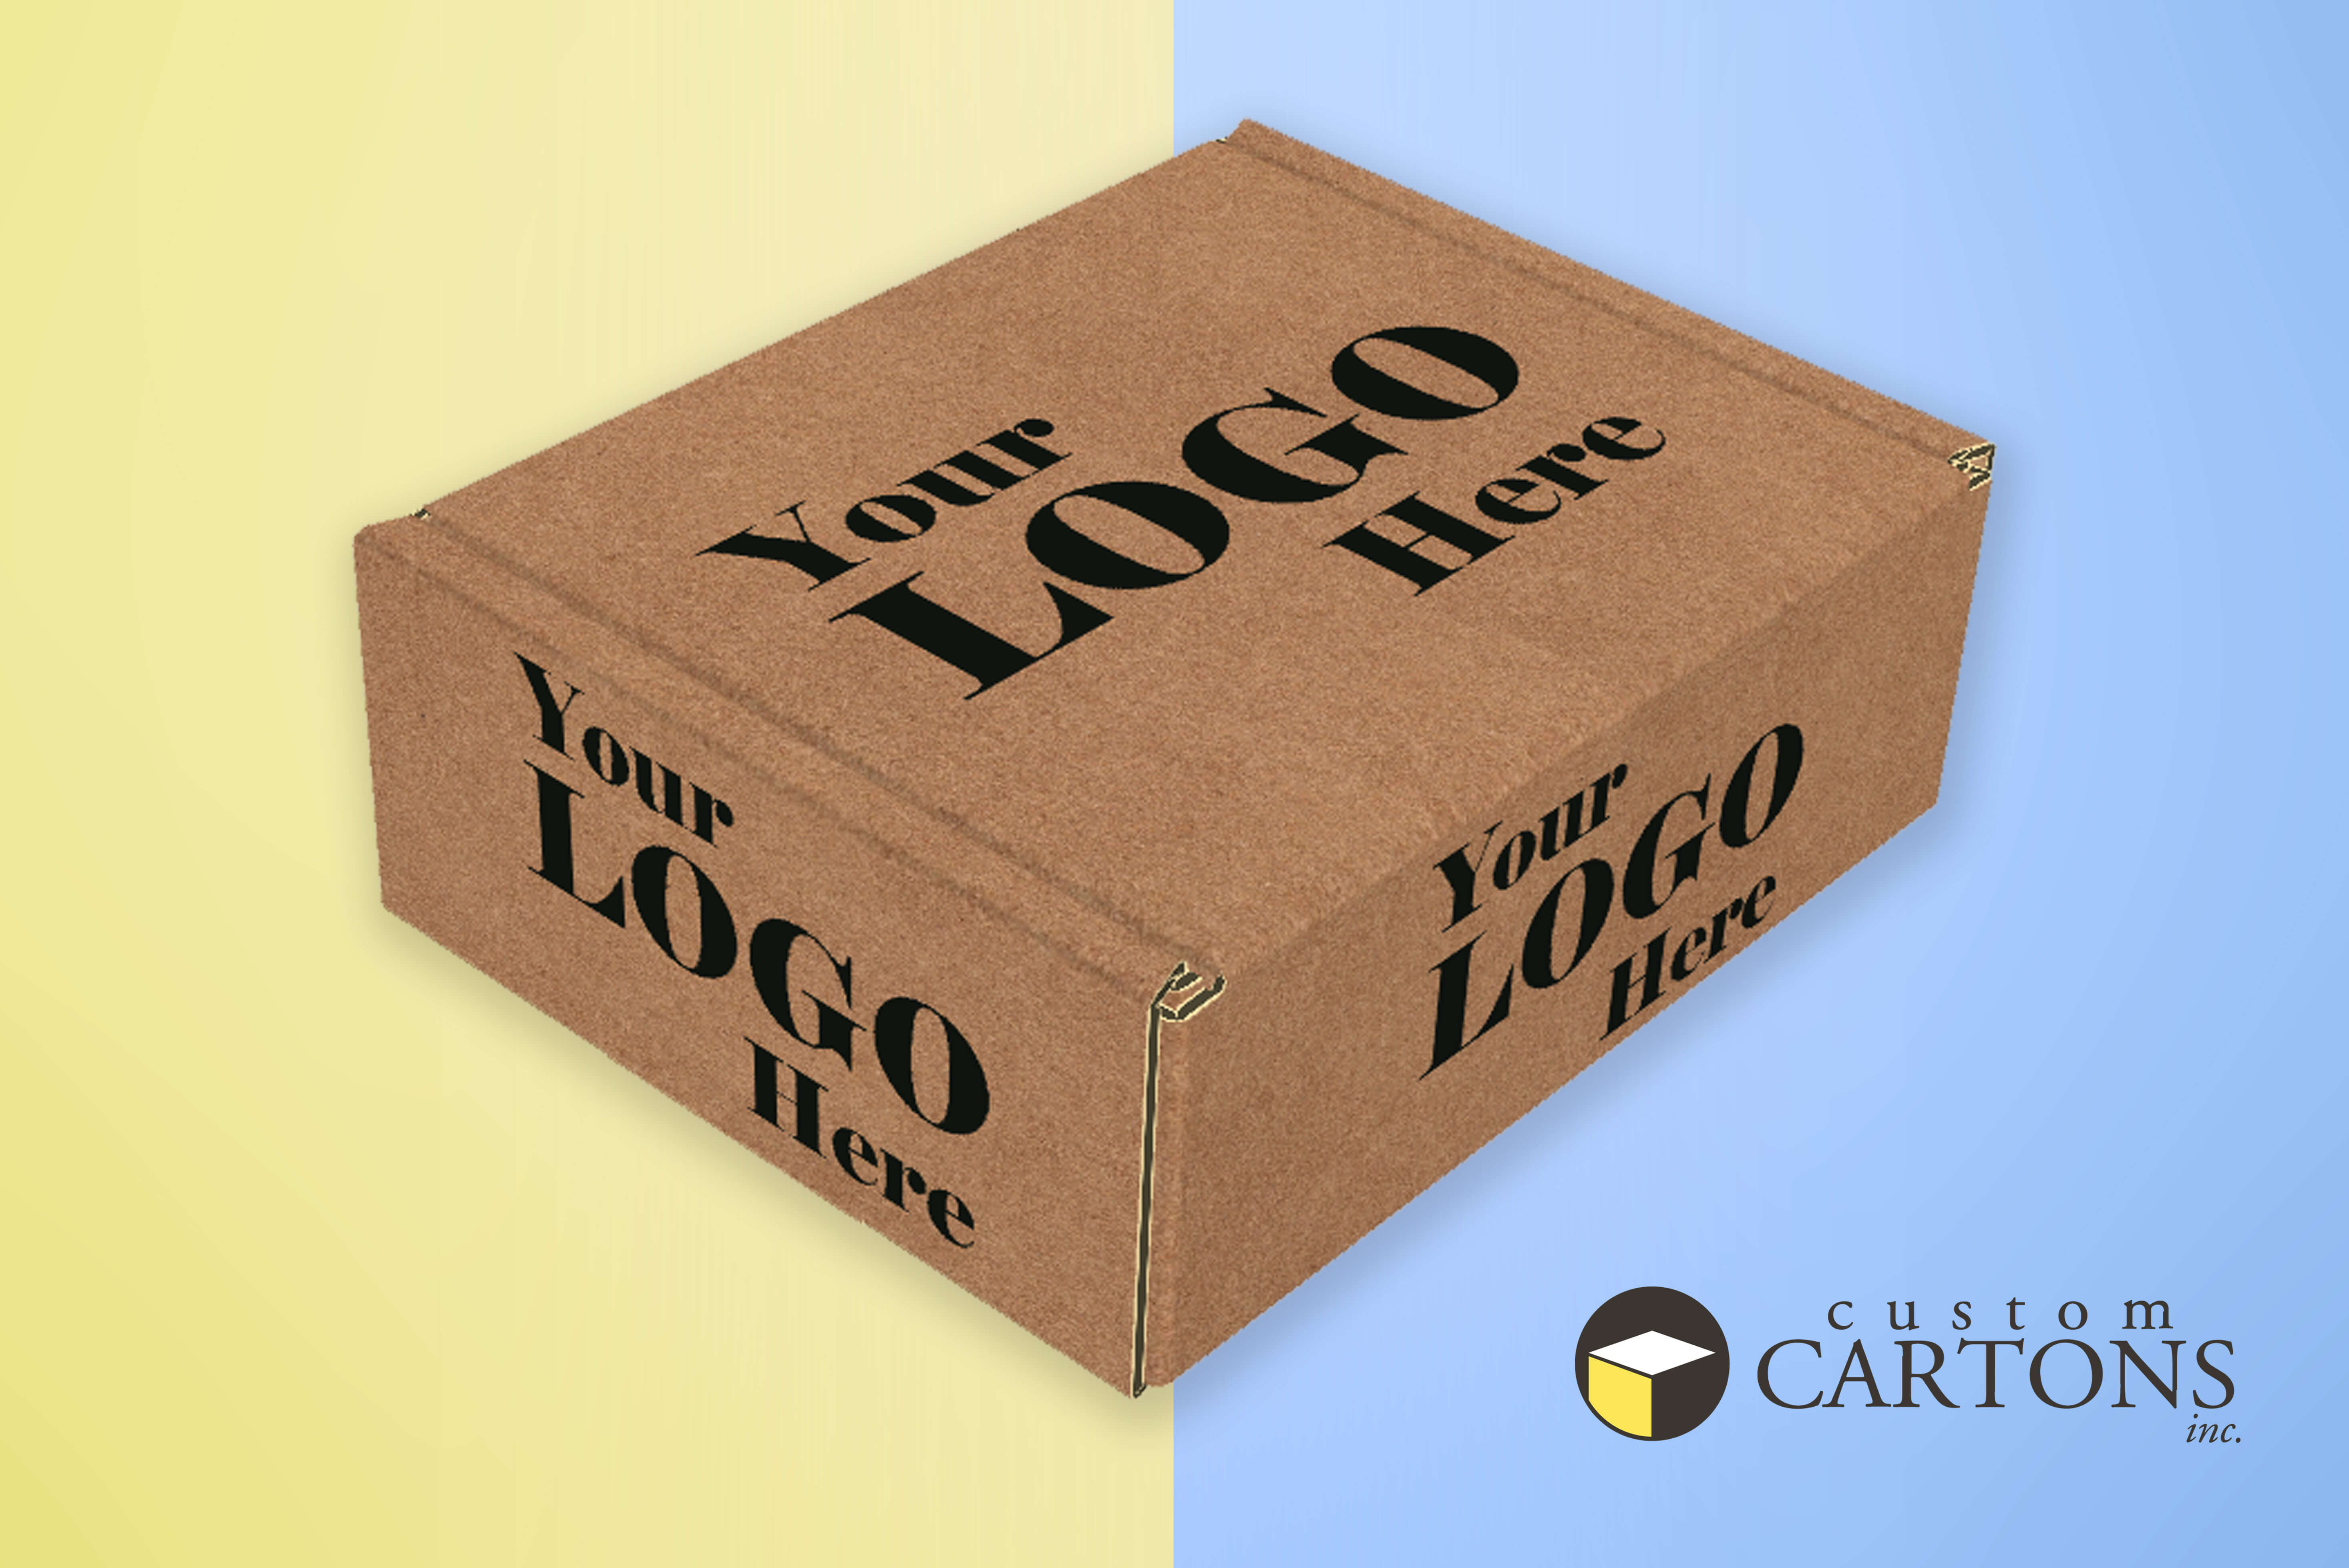 Custom Cartons creates the finest custom designed shipping boxes